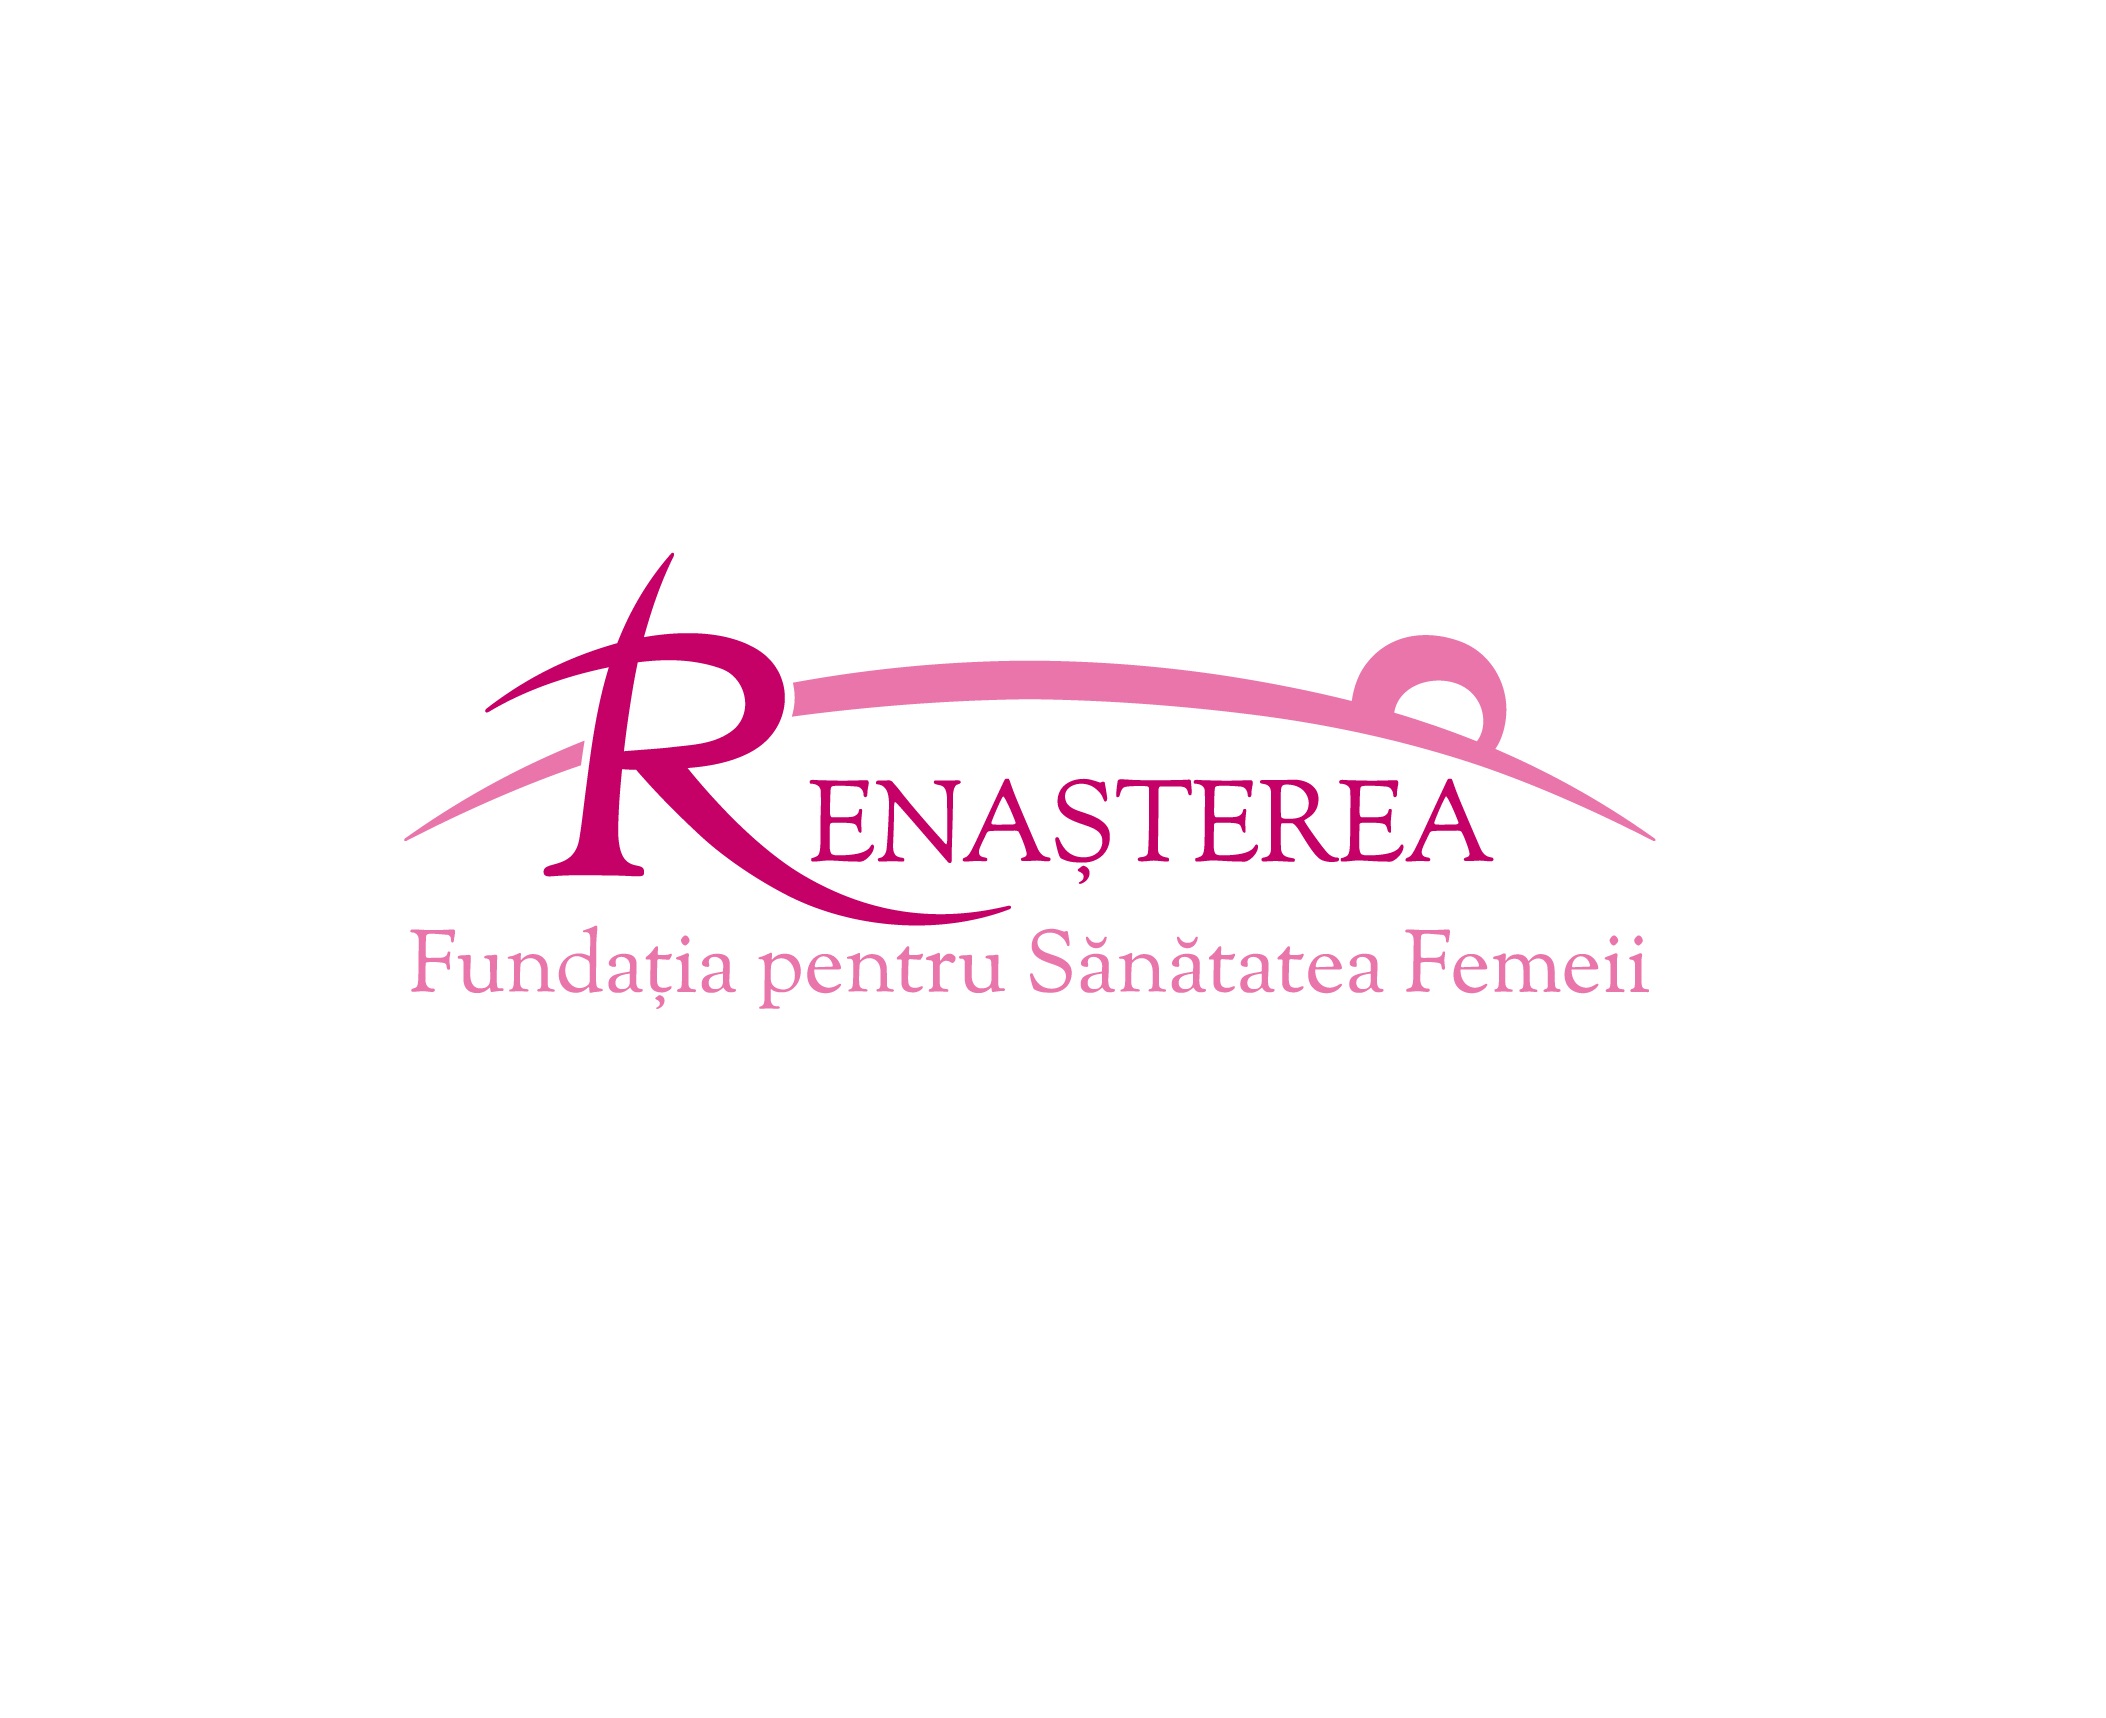 Fundatia Renasterea logo